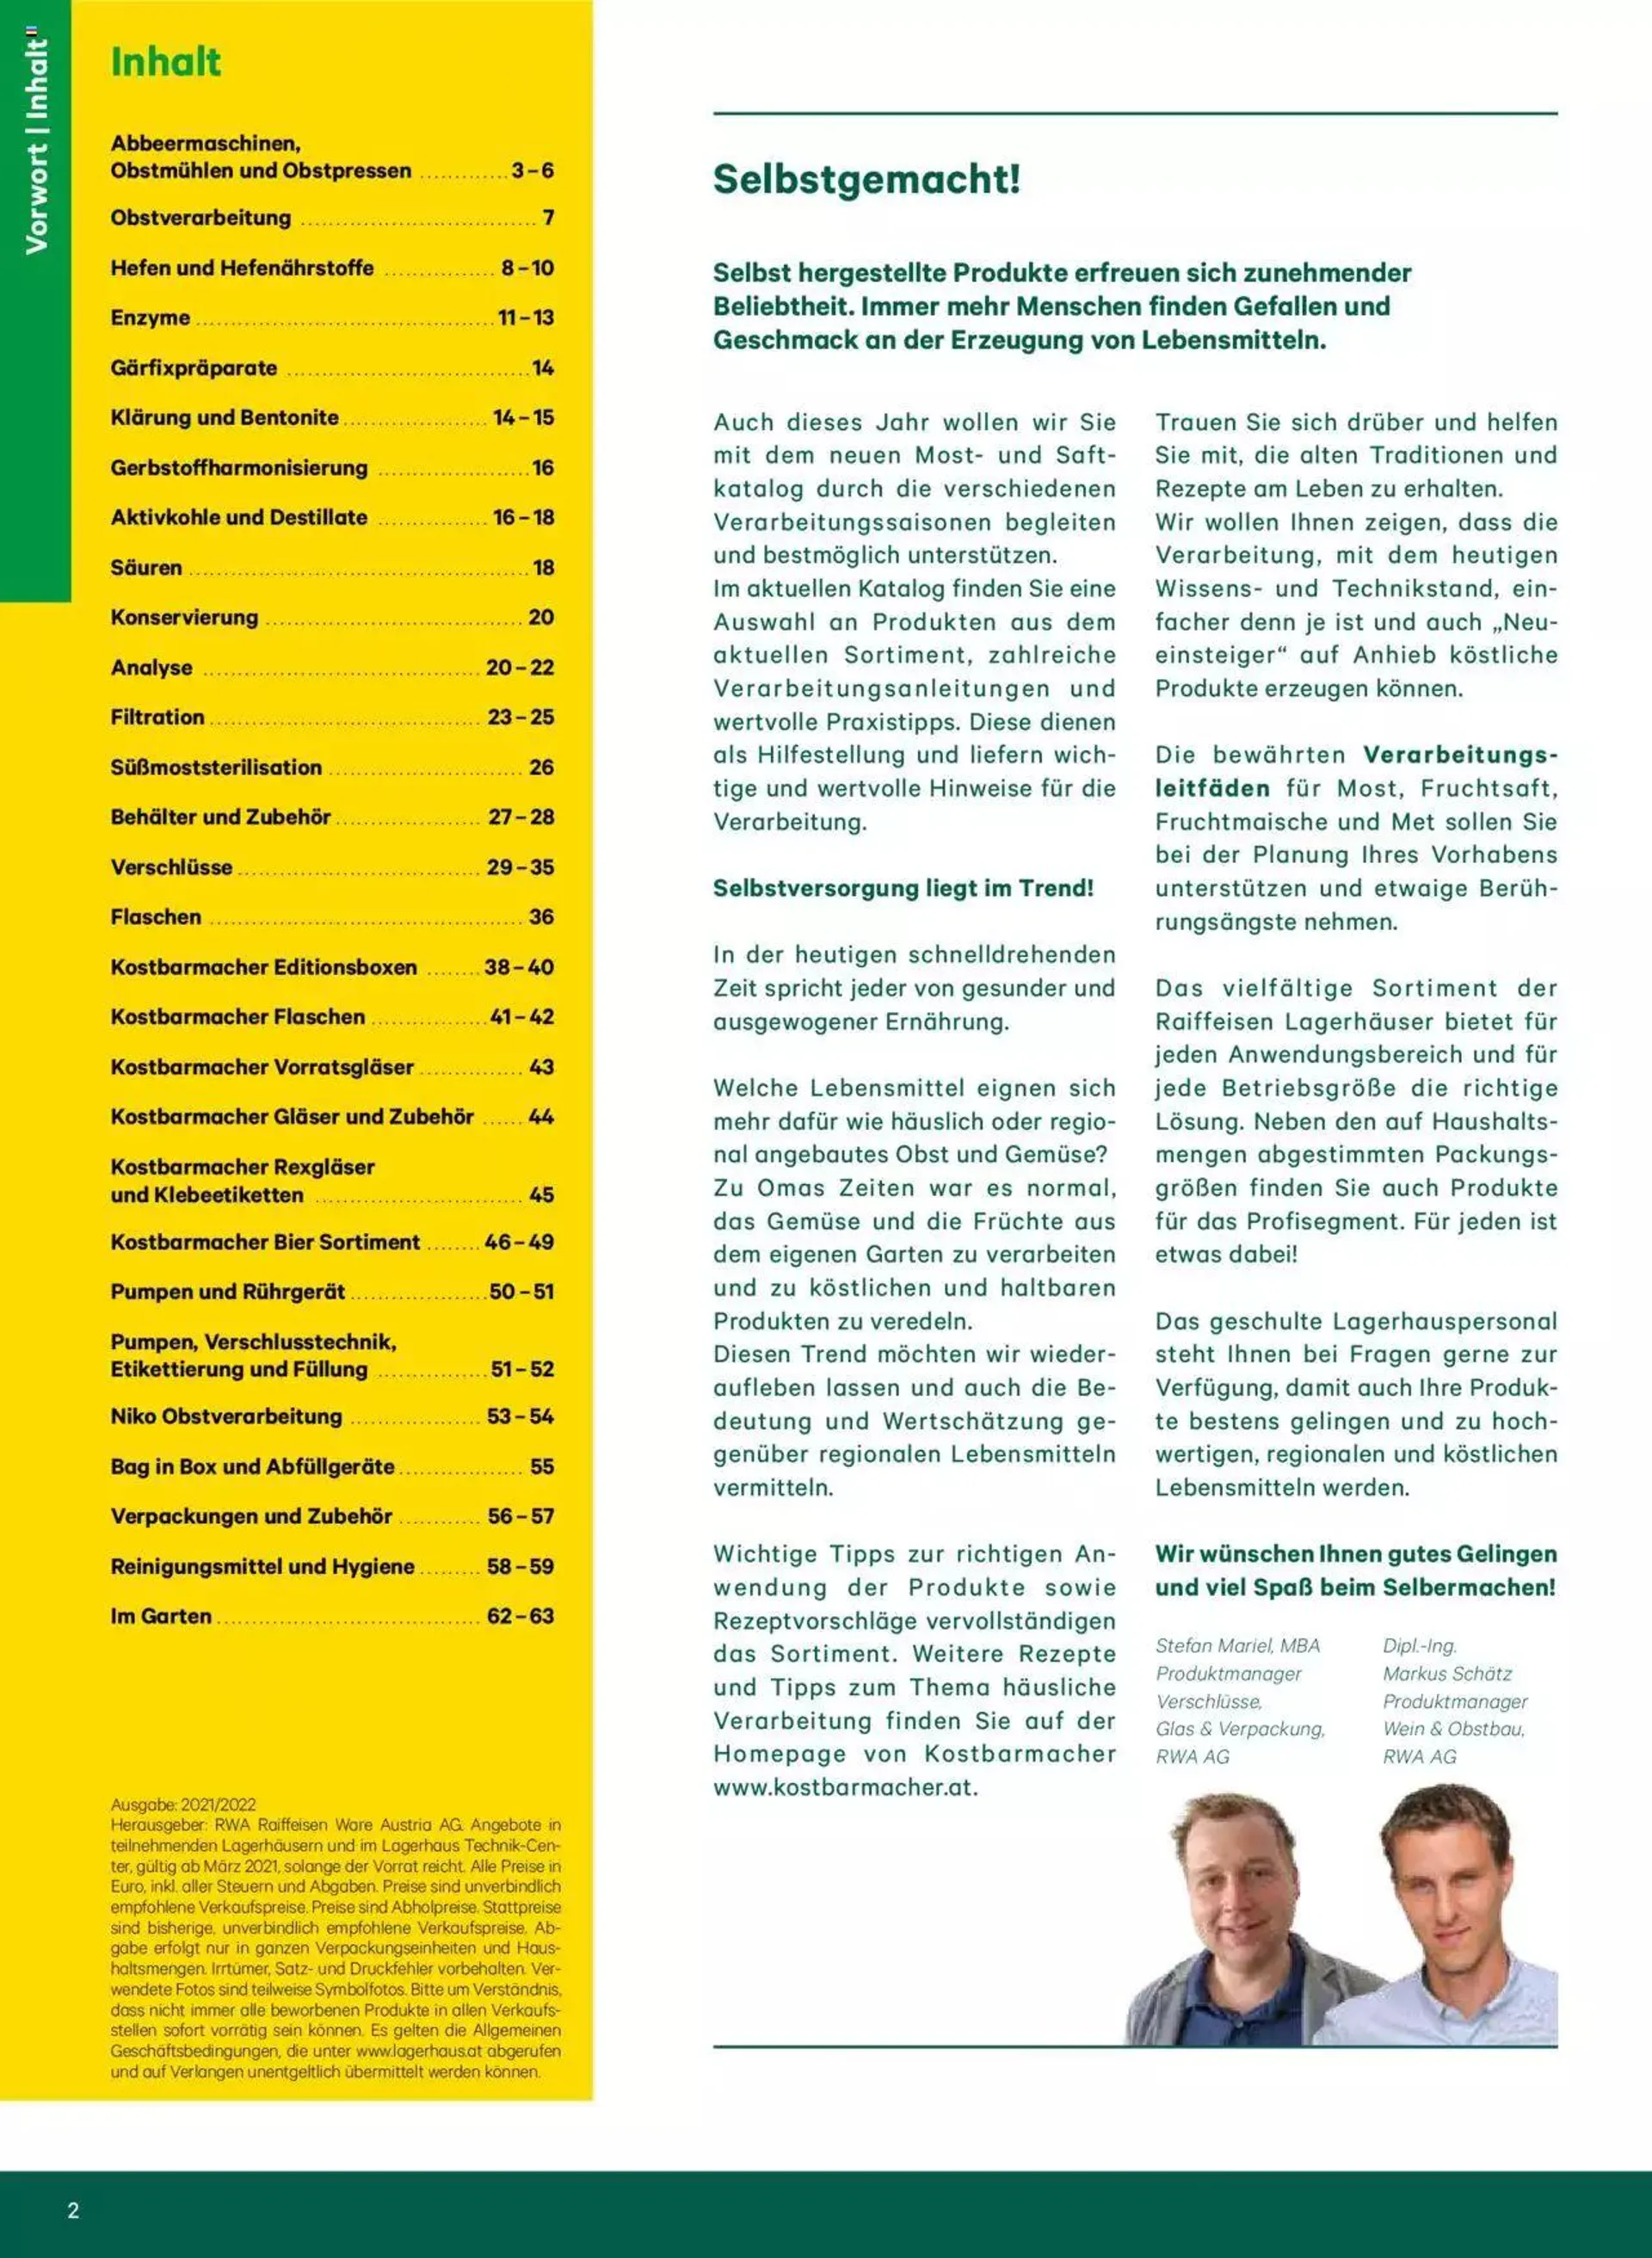 Lagerhaus - Katalog Most & Saft - 1